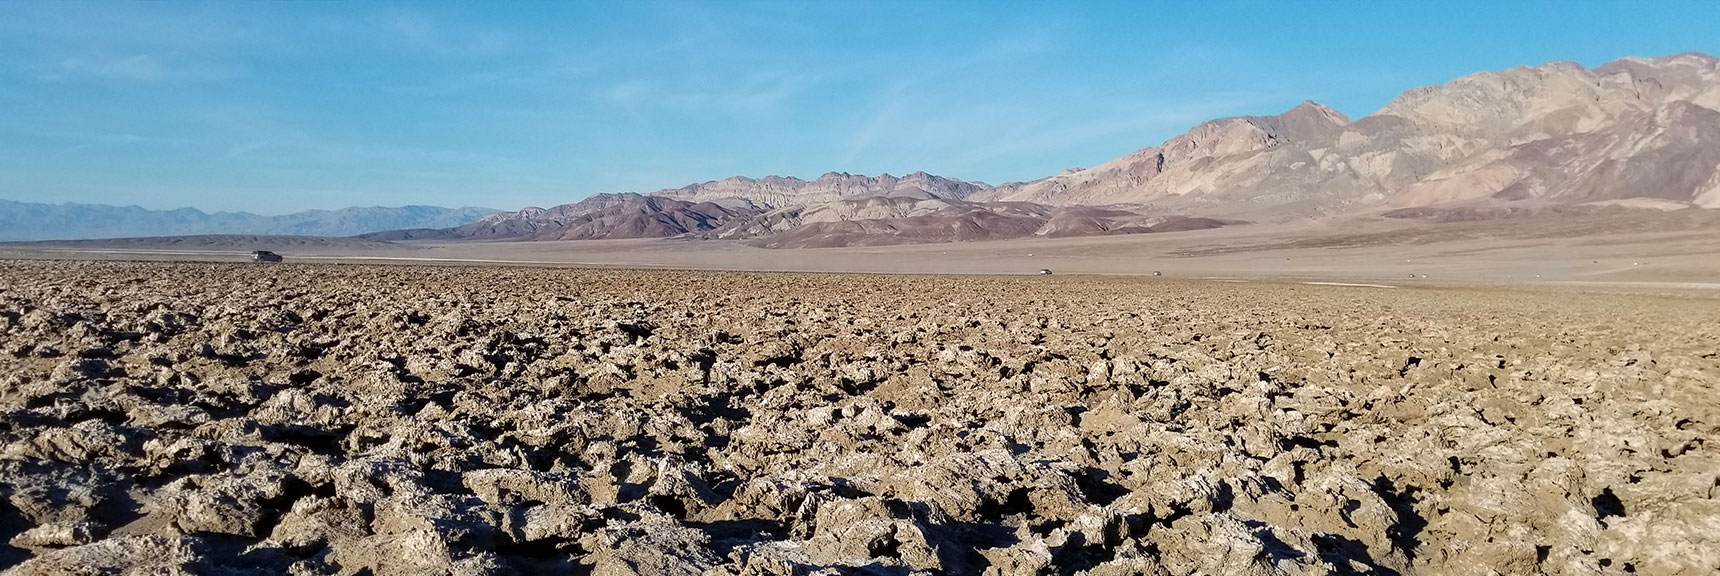 Death Valley National Park Devil's Golf Course November 24th 2018